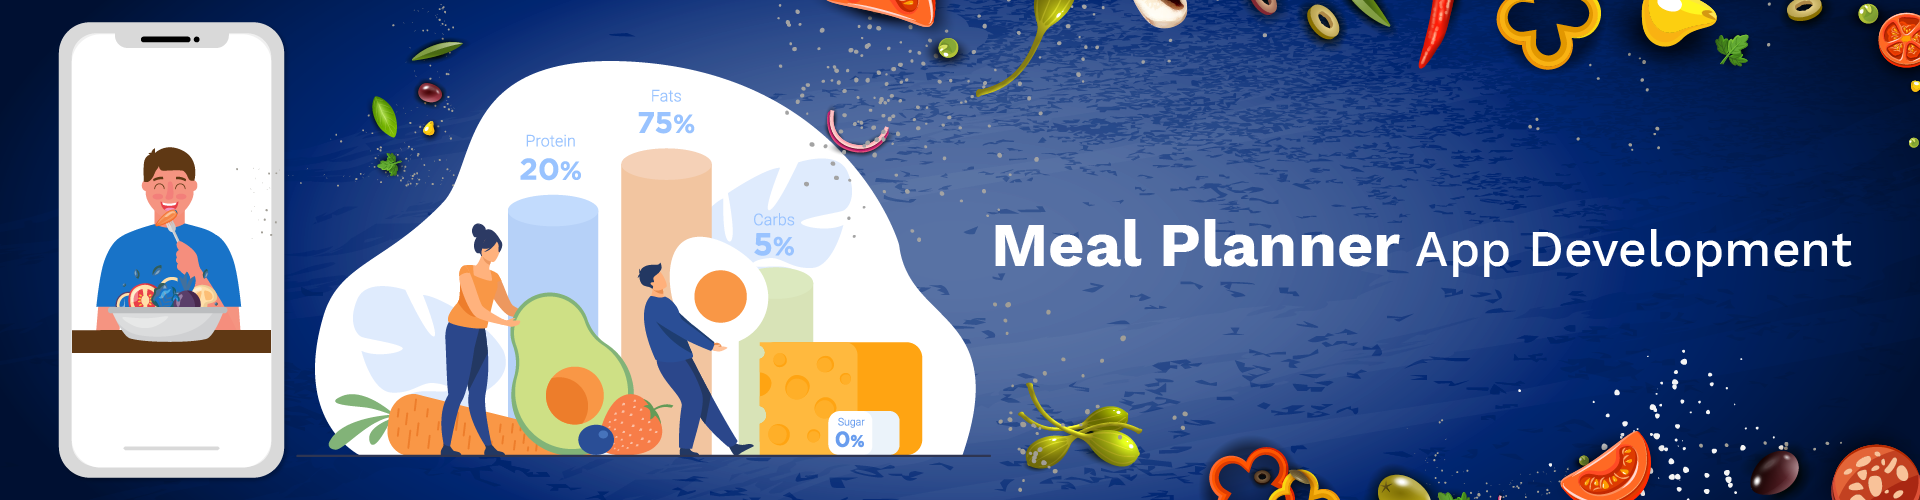 meal planner app